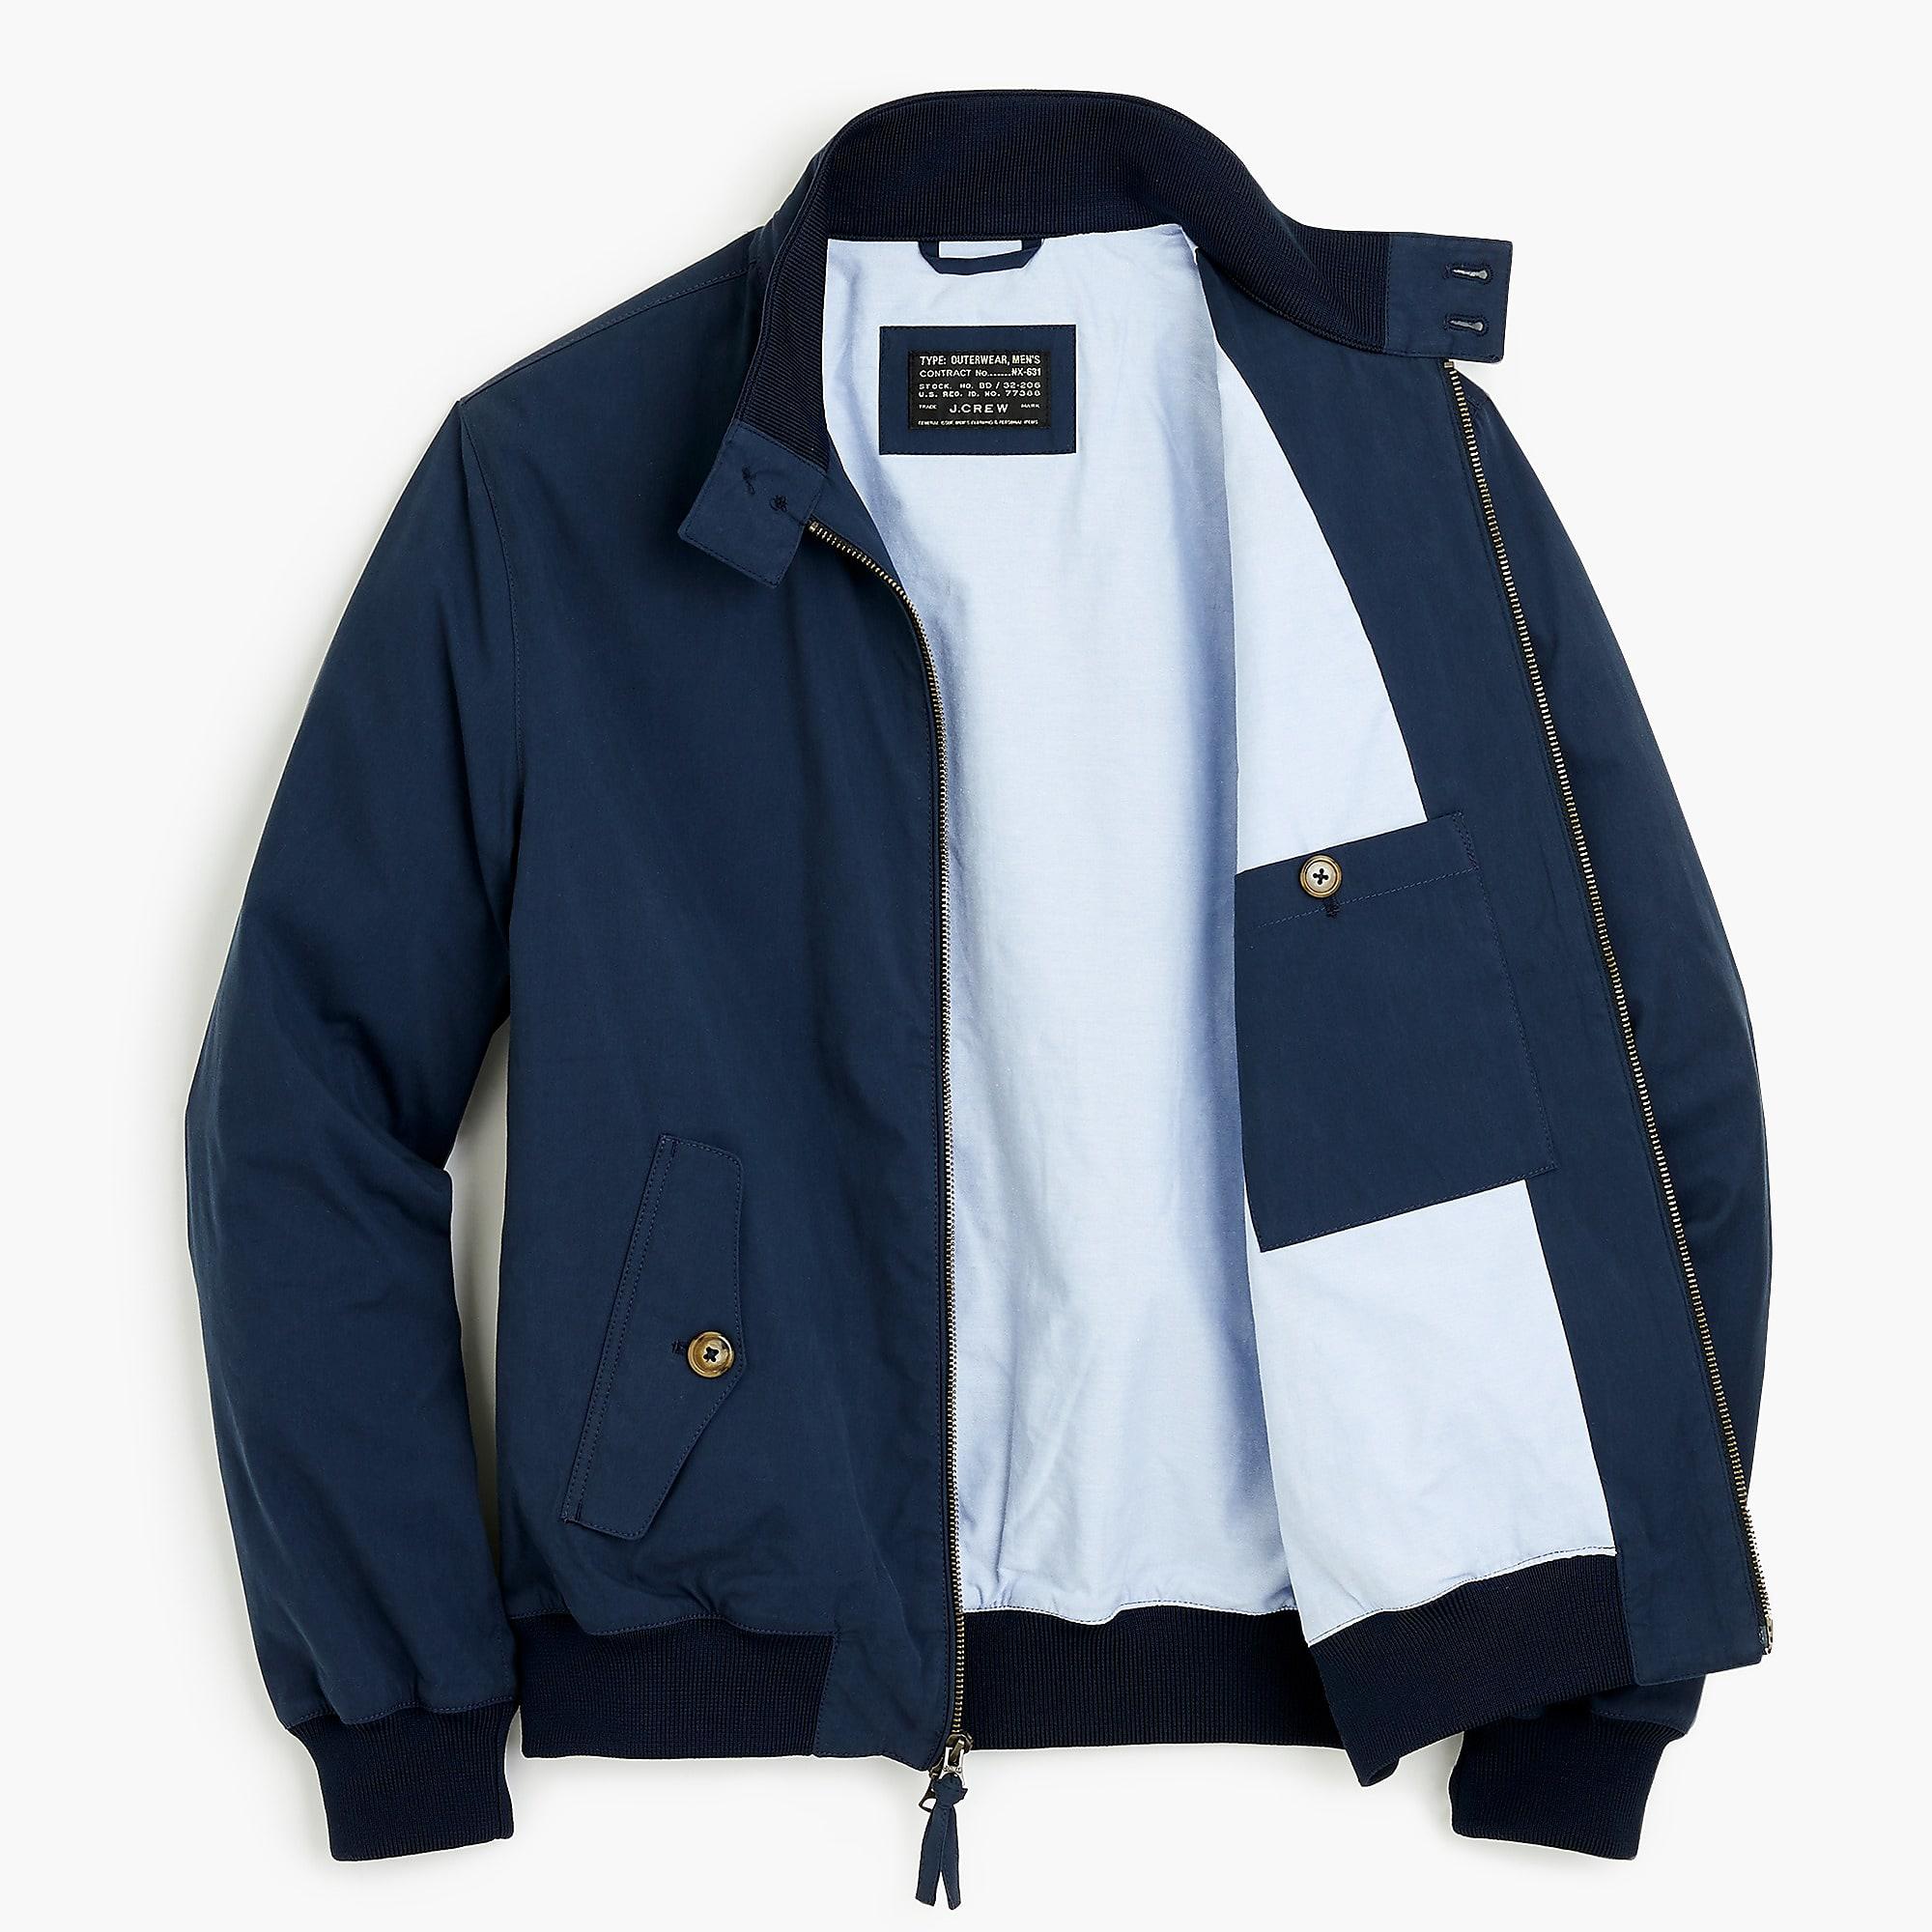 J.Crew Cotton Harrington Jacket in Blue for Men - Lyst